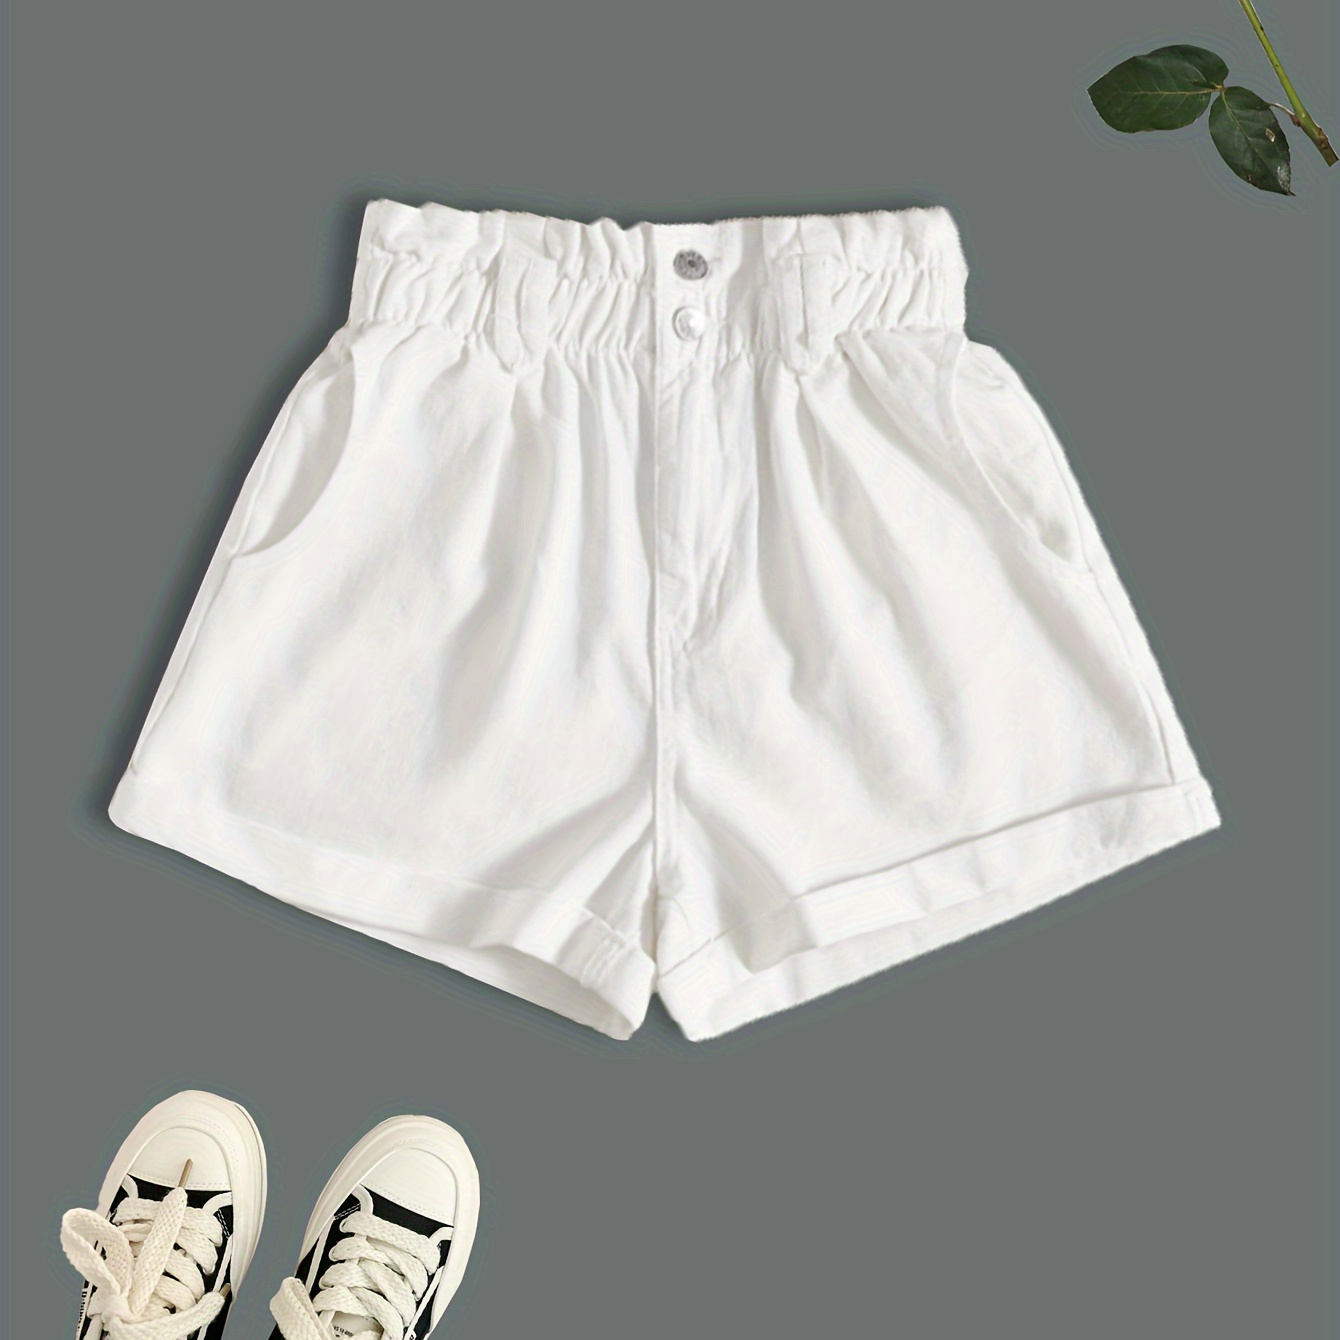 

Women's Fashion Denim Shorts, Casual Style, Elastic Waistband, Plain White, Summer Essential, Versatile Pockets